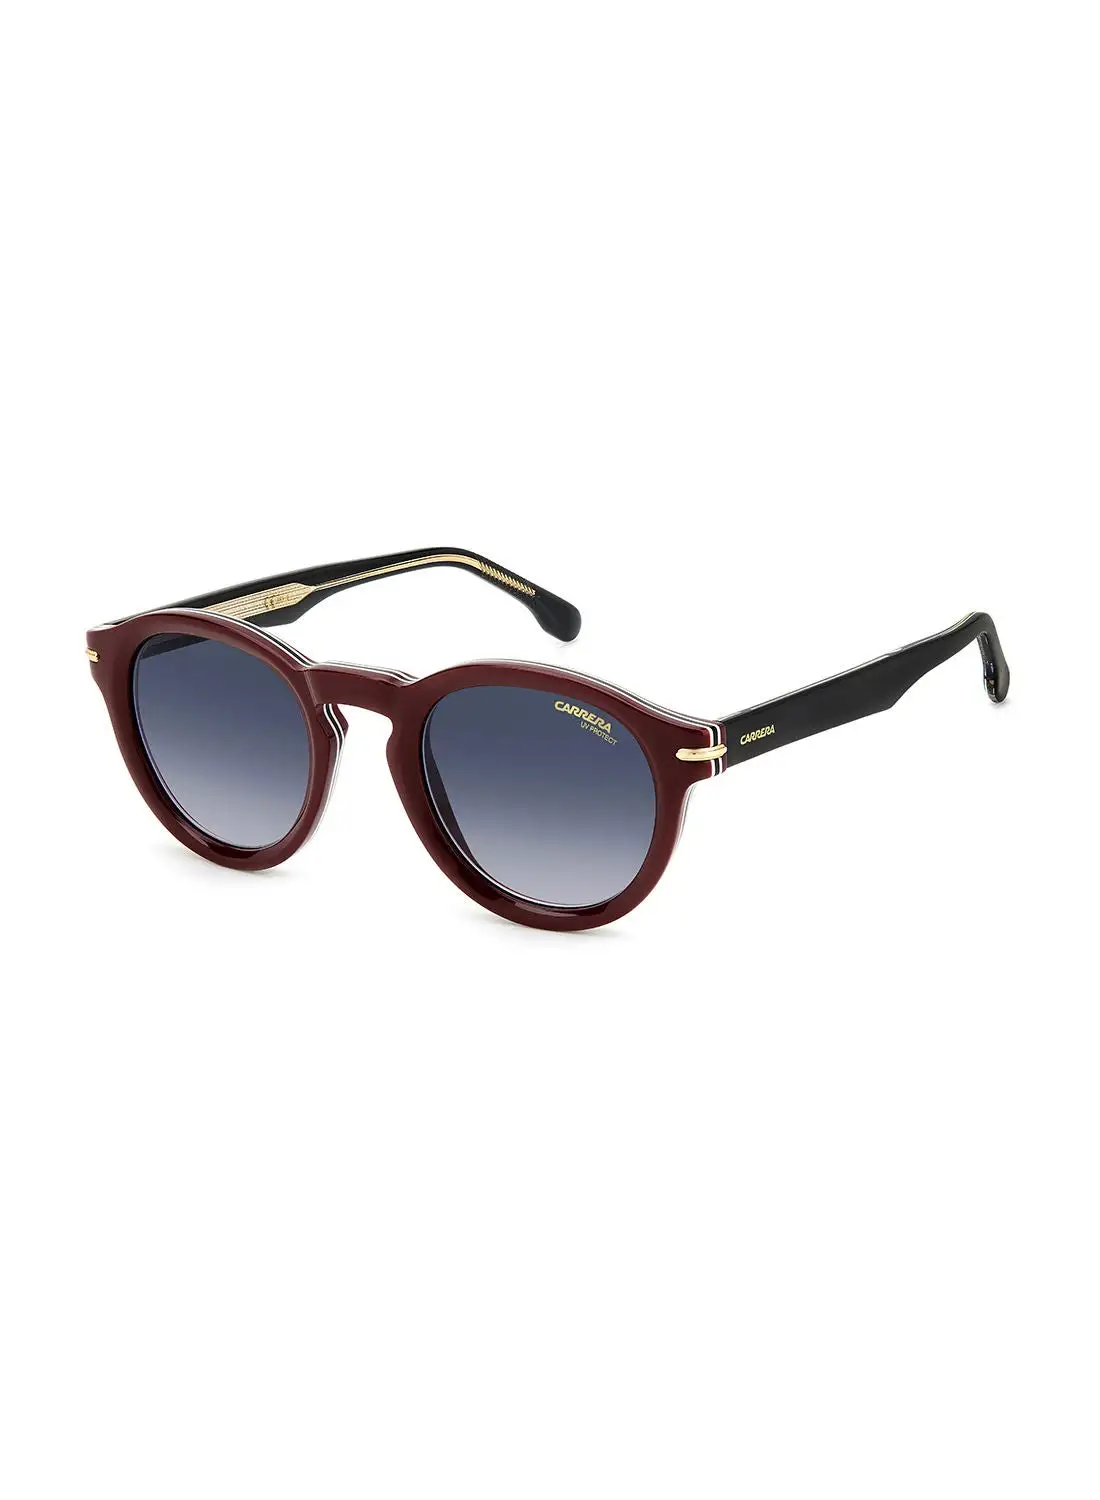 Carrera Unisex UV Protection Round Sunglasses - Carrera 306/S Burgandy 48 - Lens Size: 48 Mm